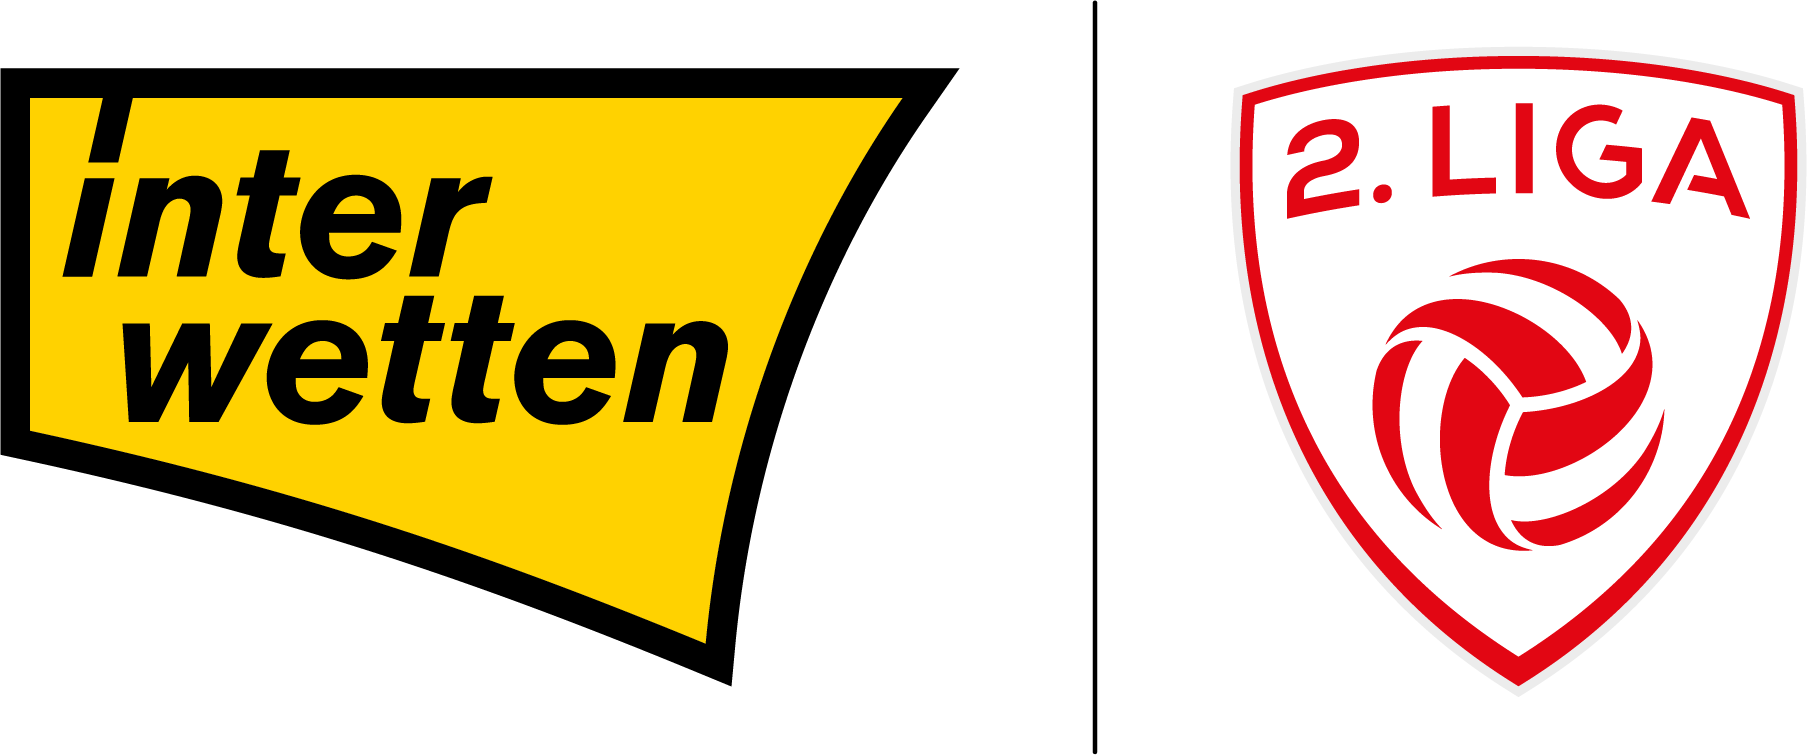 Wacker Innsbruck Logo / This logo's beauty is based on the importance